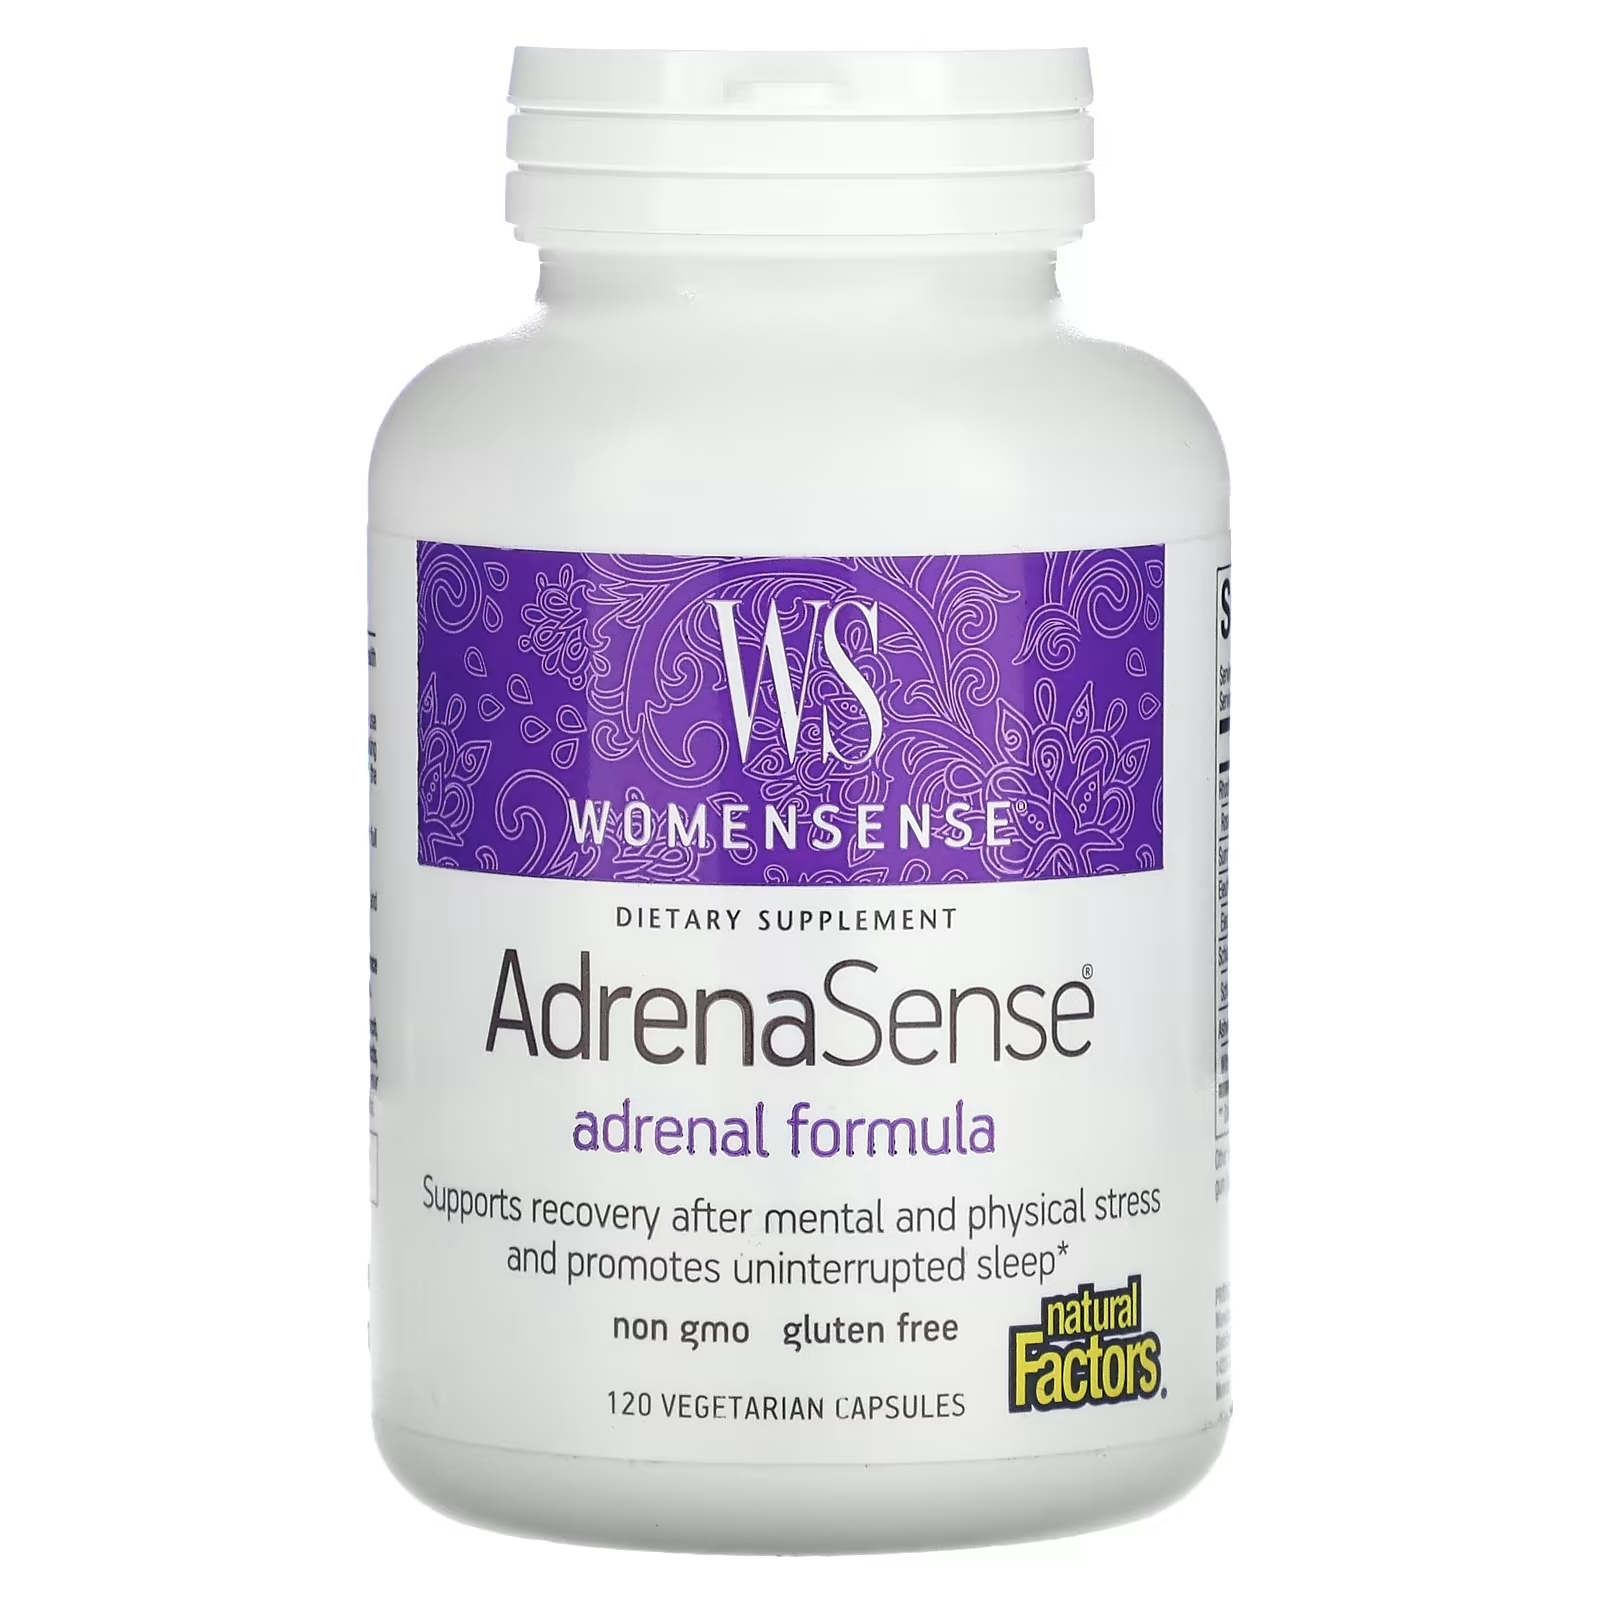 natural factors womensense bladdersense 90 вегетарианских капсул Формула для Надпочечников Natural Factors WomenSense AdrenaSense, 120 вегетарианских капсул